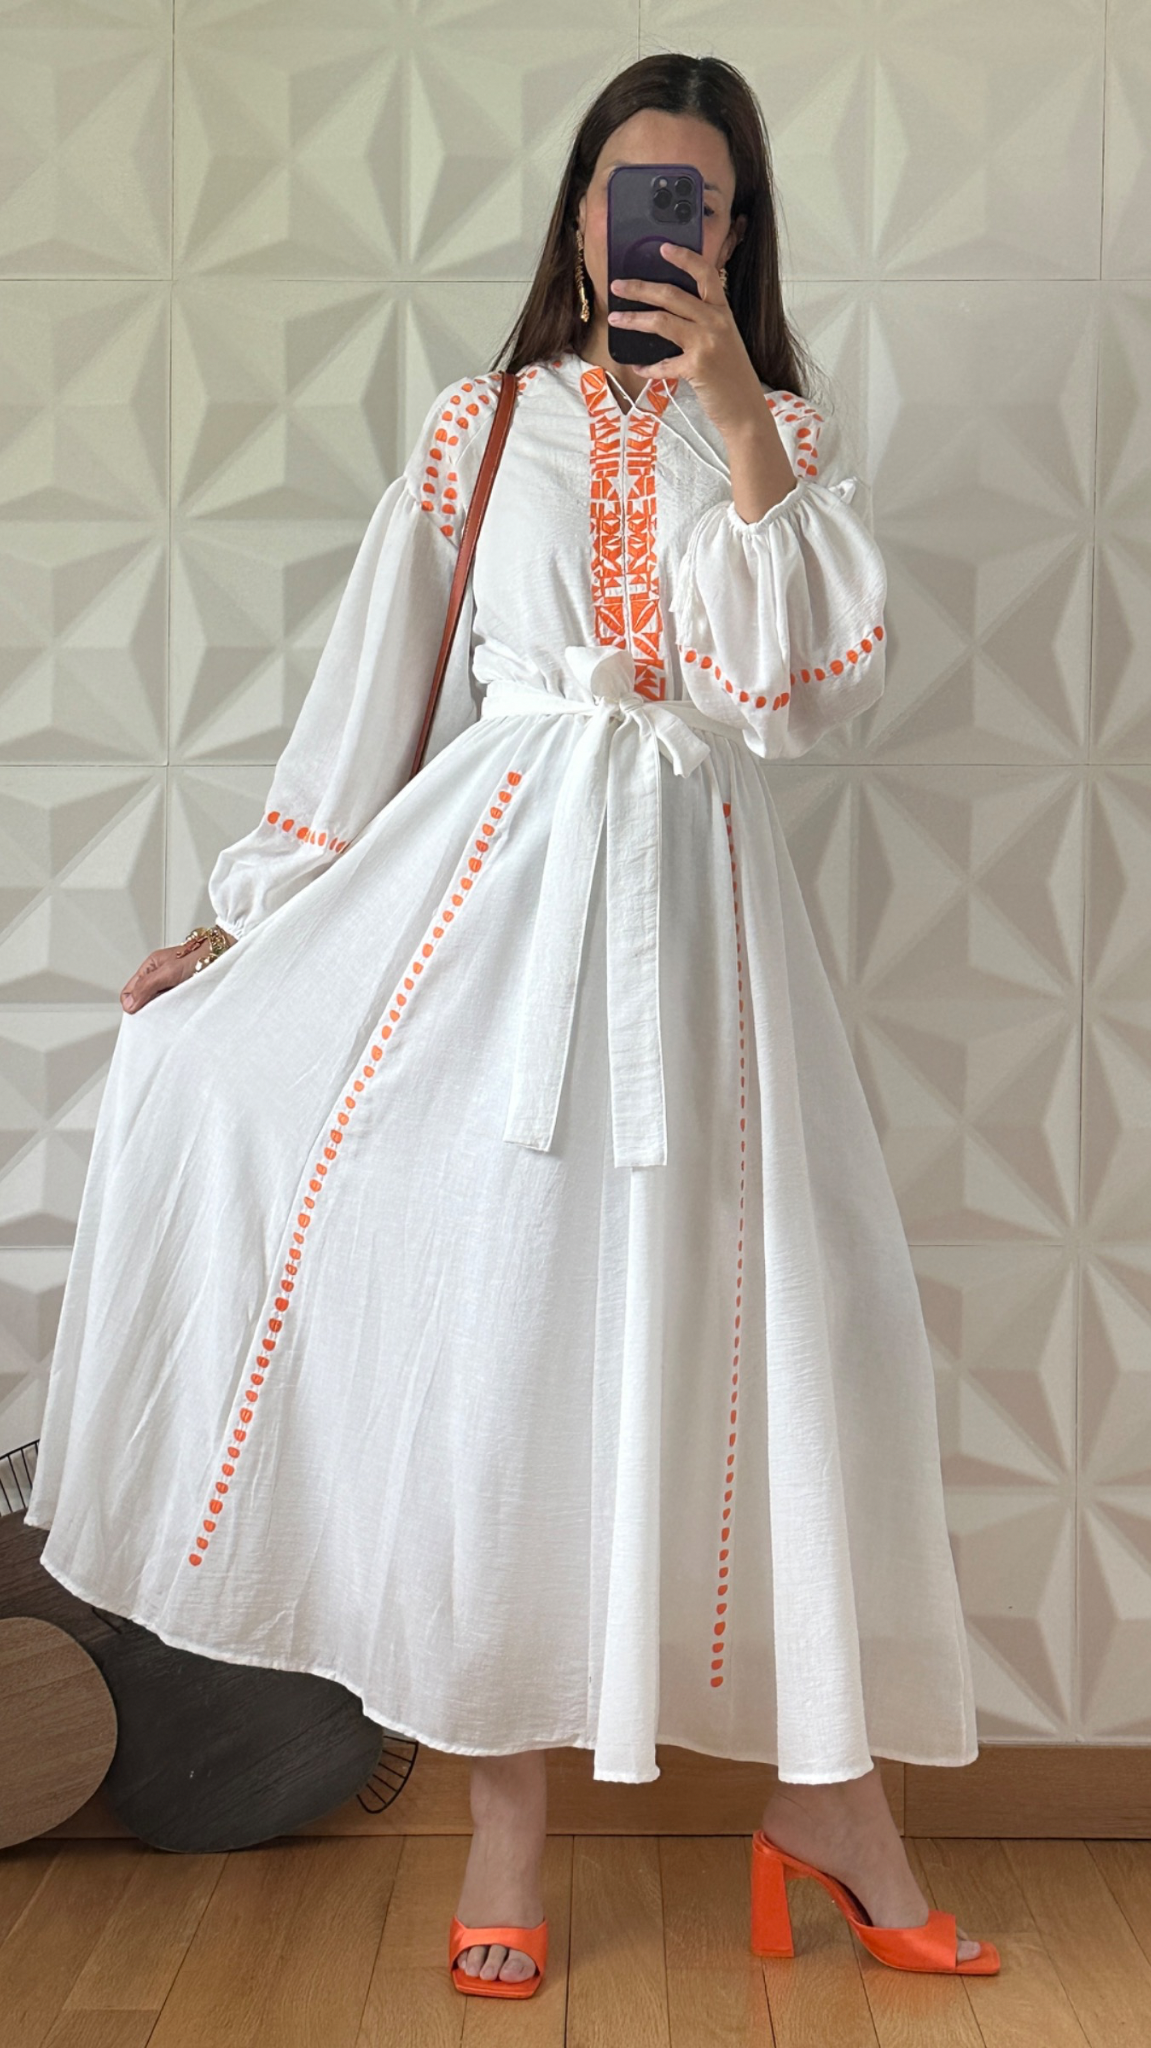 Robe à motif brodées art nouveau - Blanc motif orange